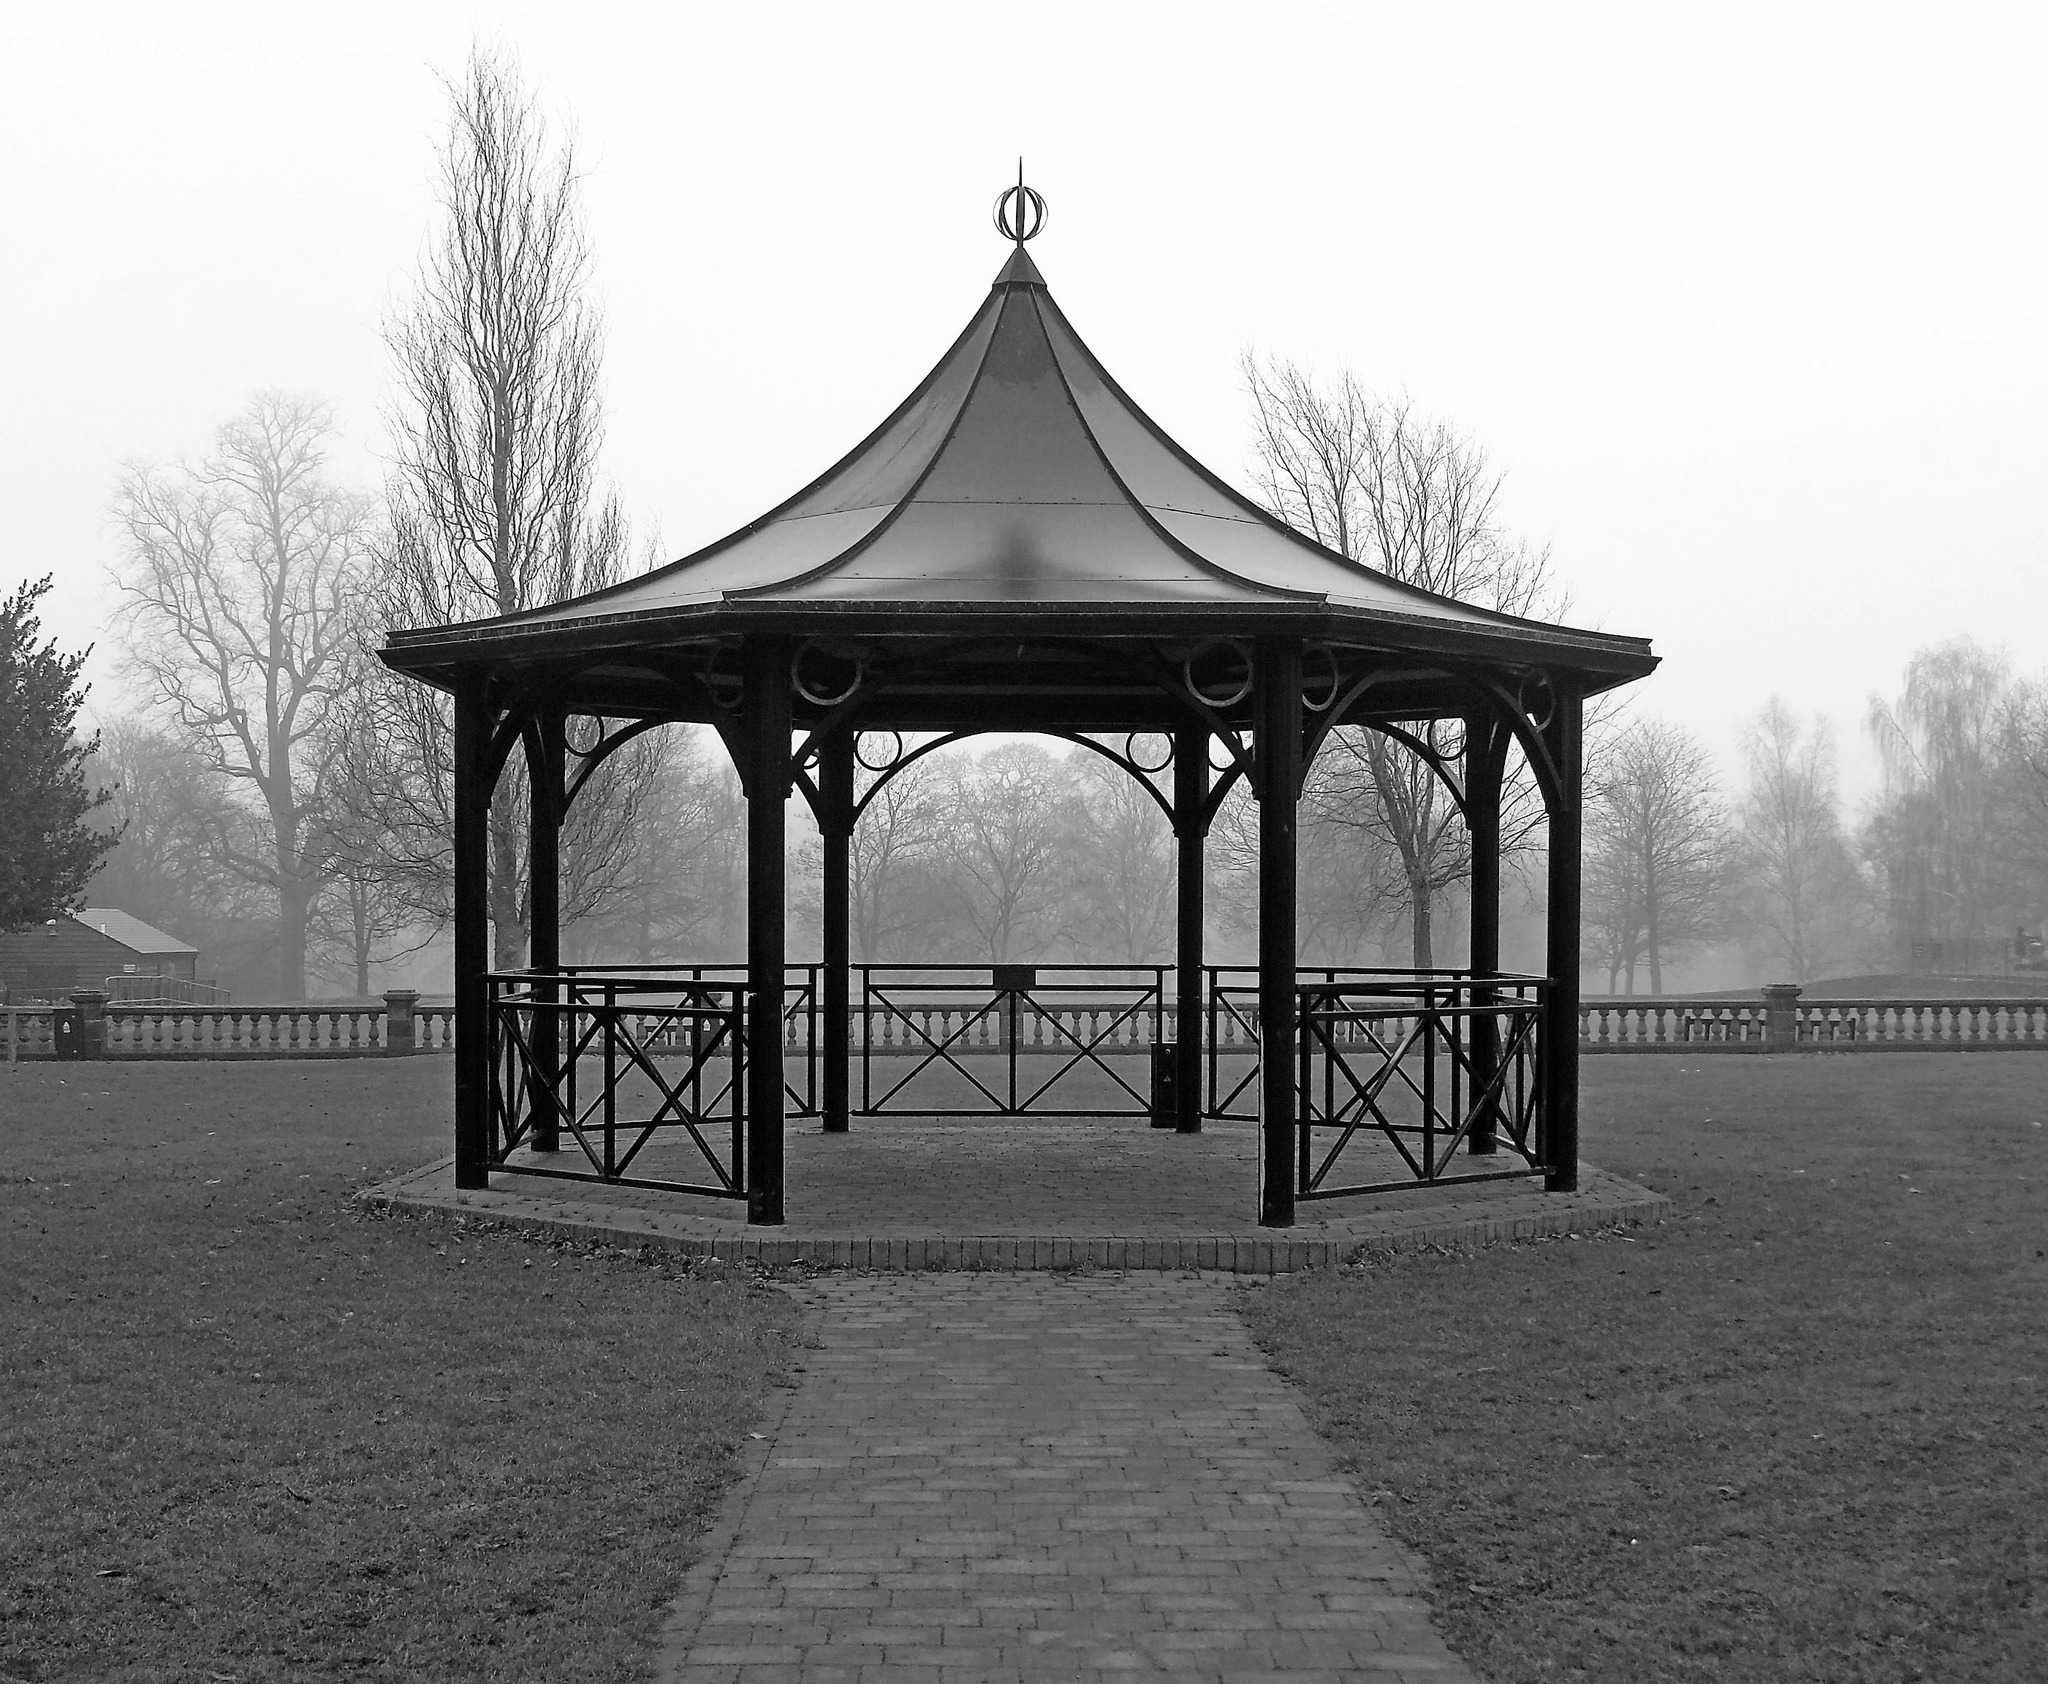 Walton Gardens bandstand by Tanya Wightman